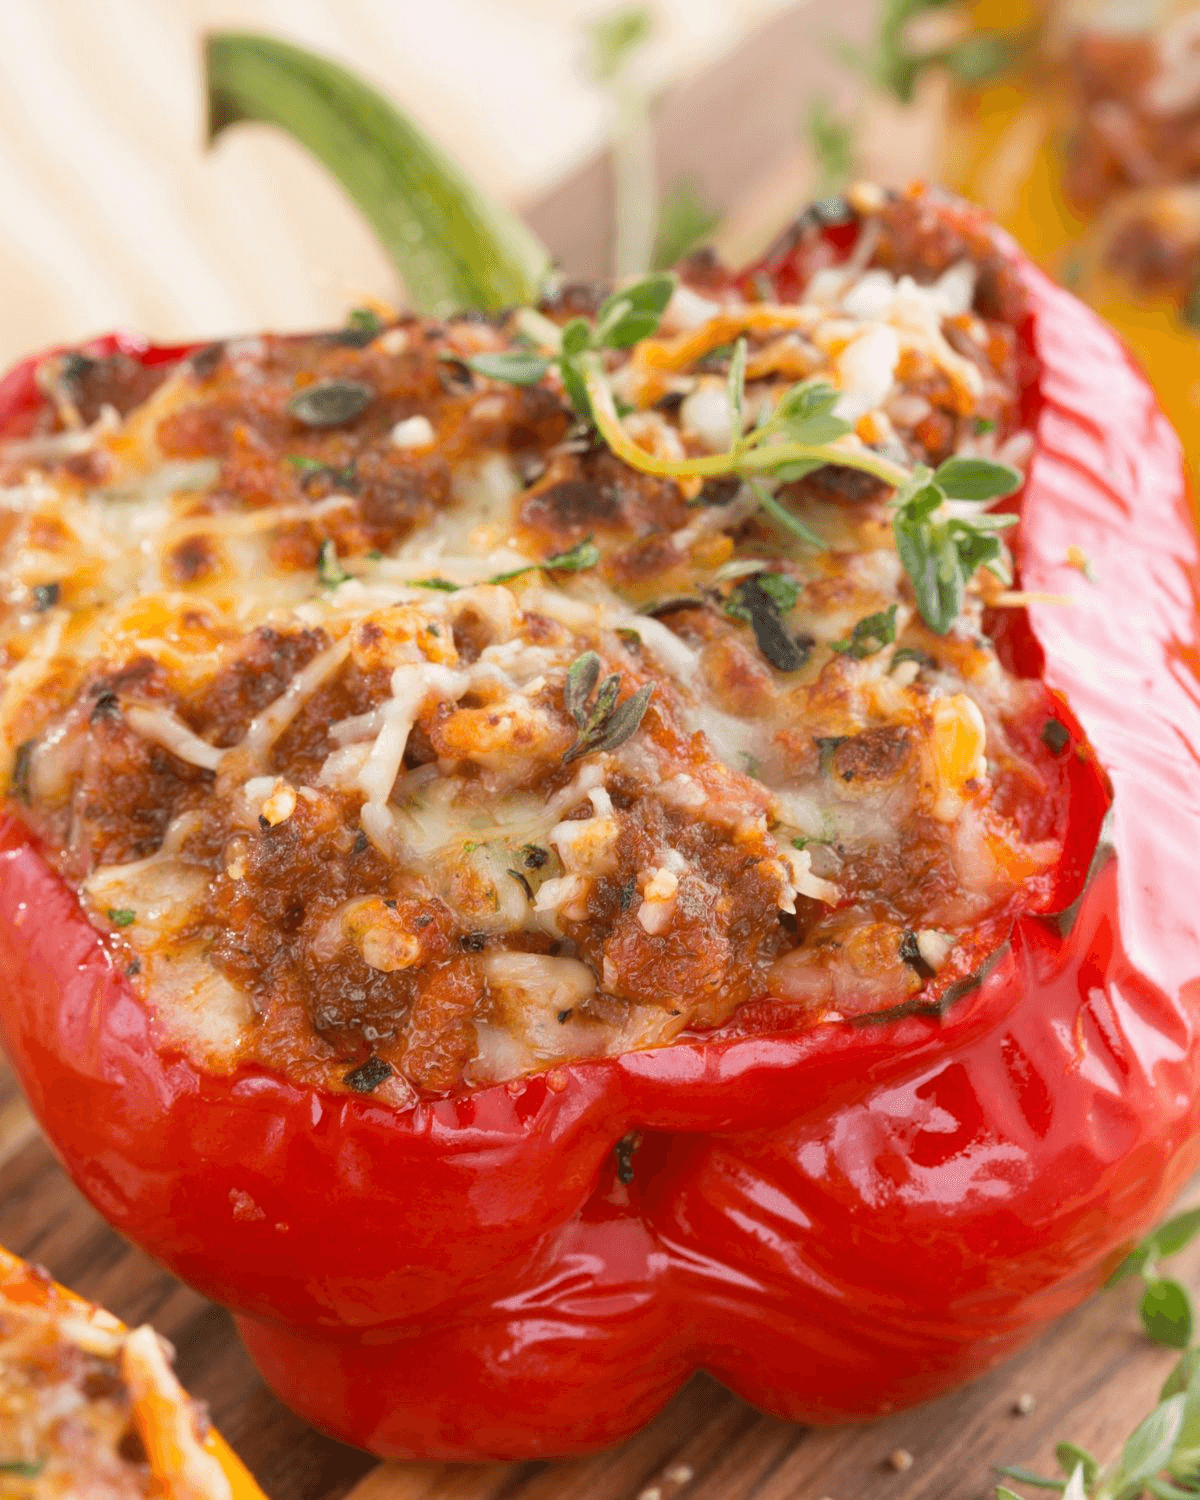 A close up on a chorizo stuffed pepper.